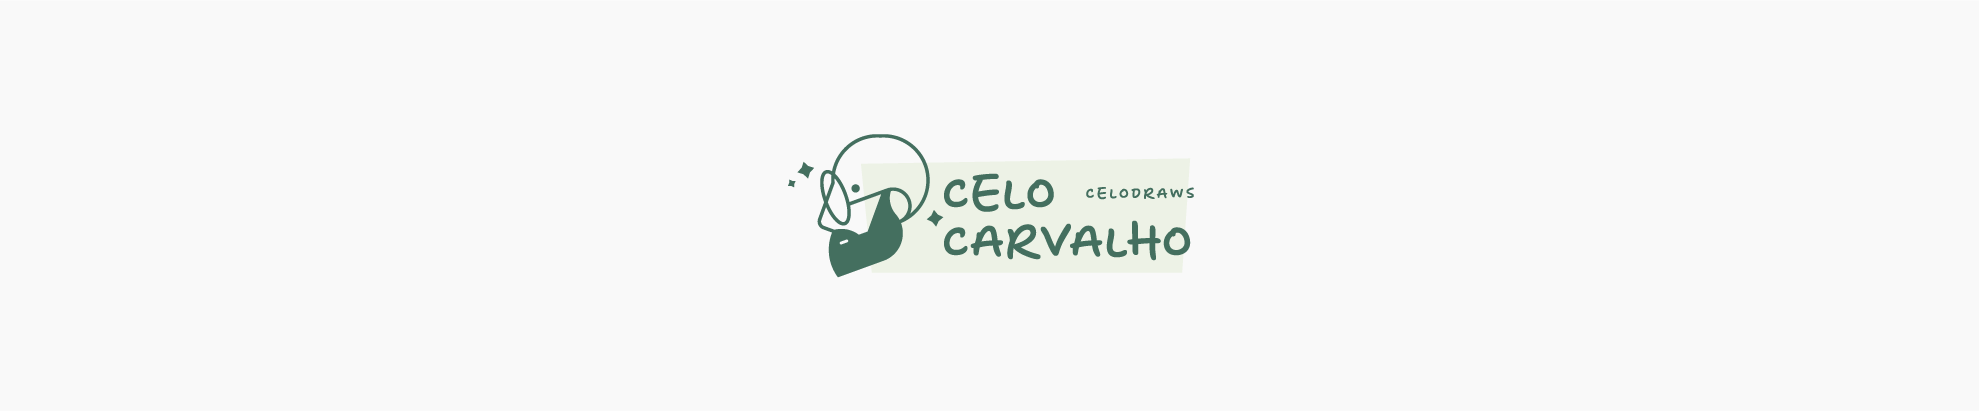 Celo Carvalhos profilbanner